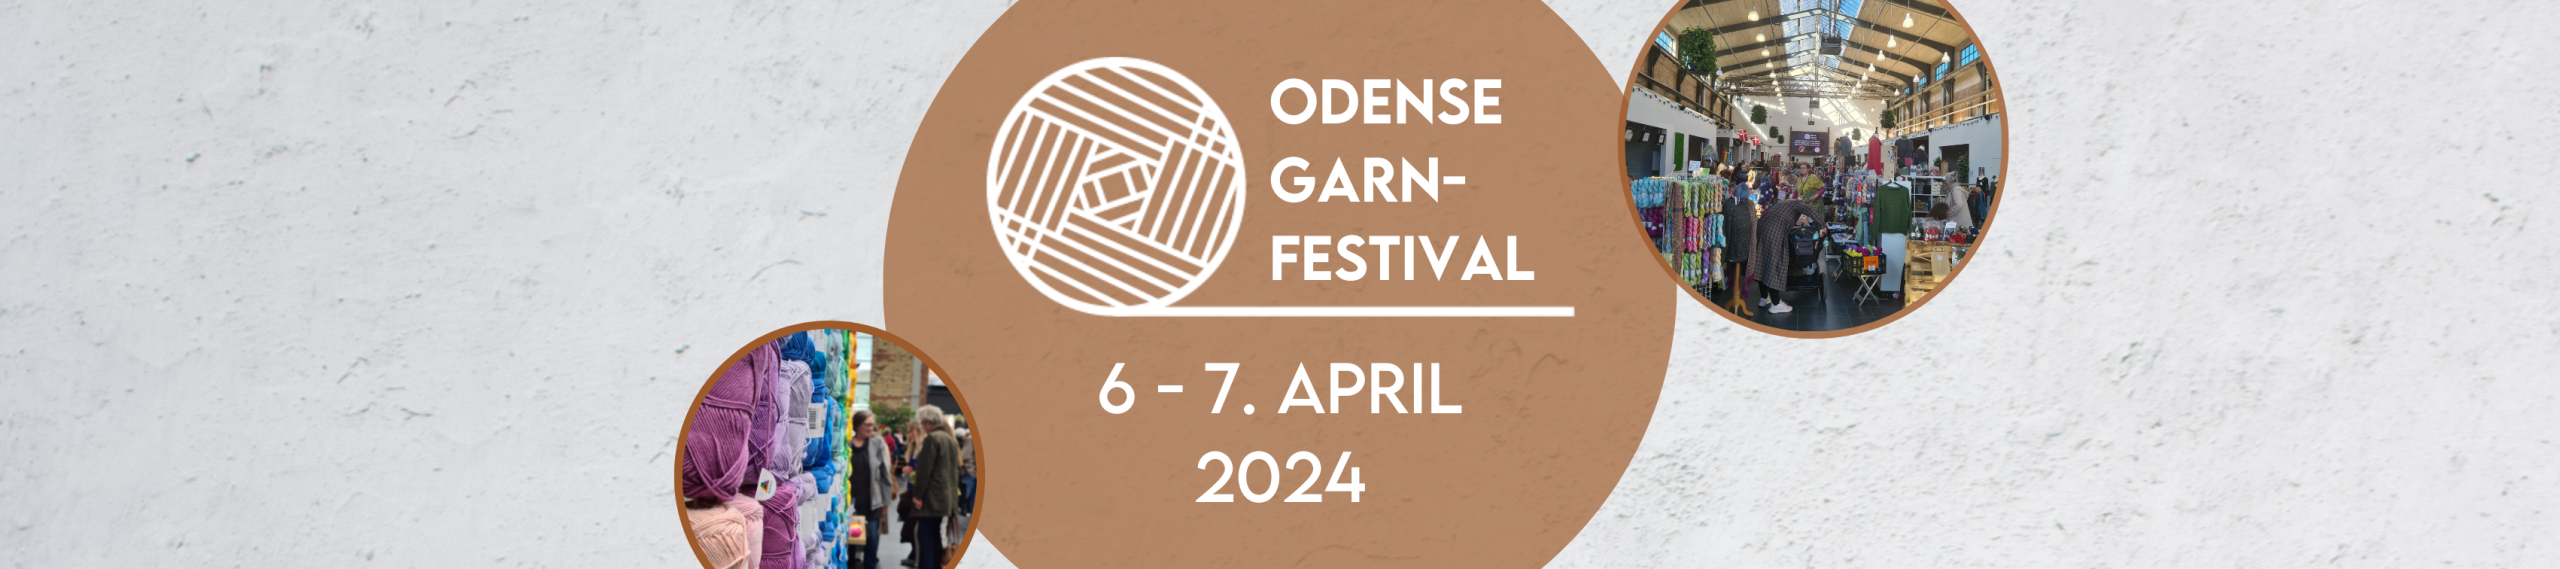 Odense Garnfestival 2024 annoncering. Garn Odense, festival, odin havnepark